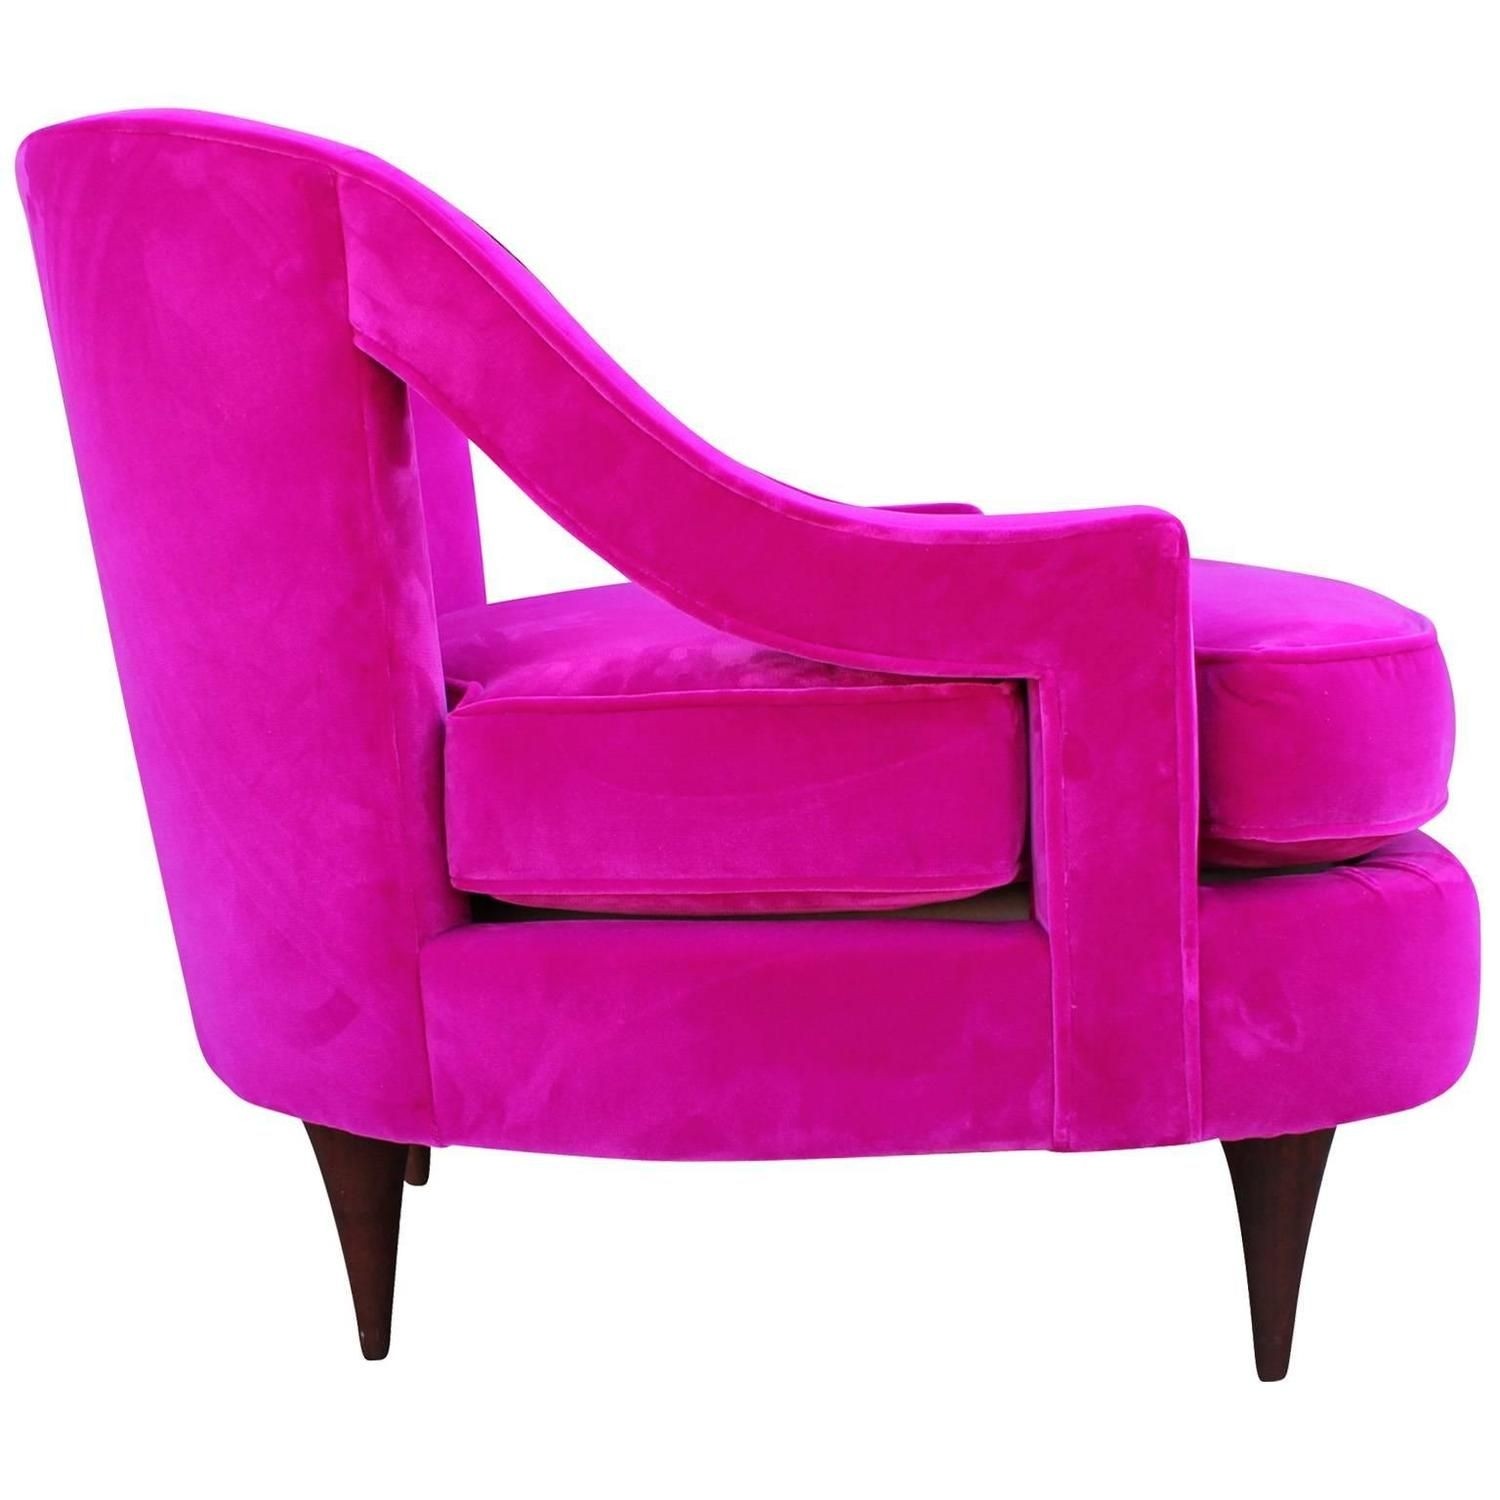 Glamorous fuchsia pink velvet lounge chair image 4 chair